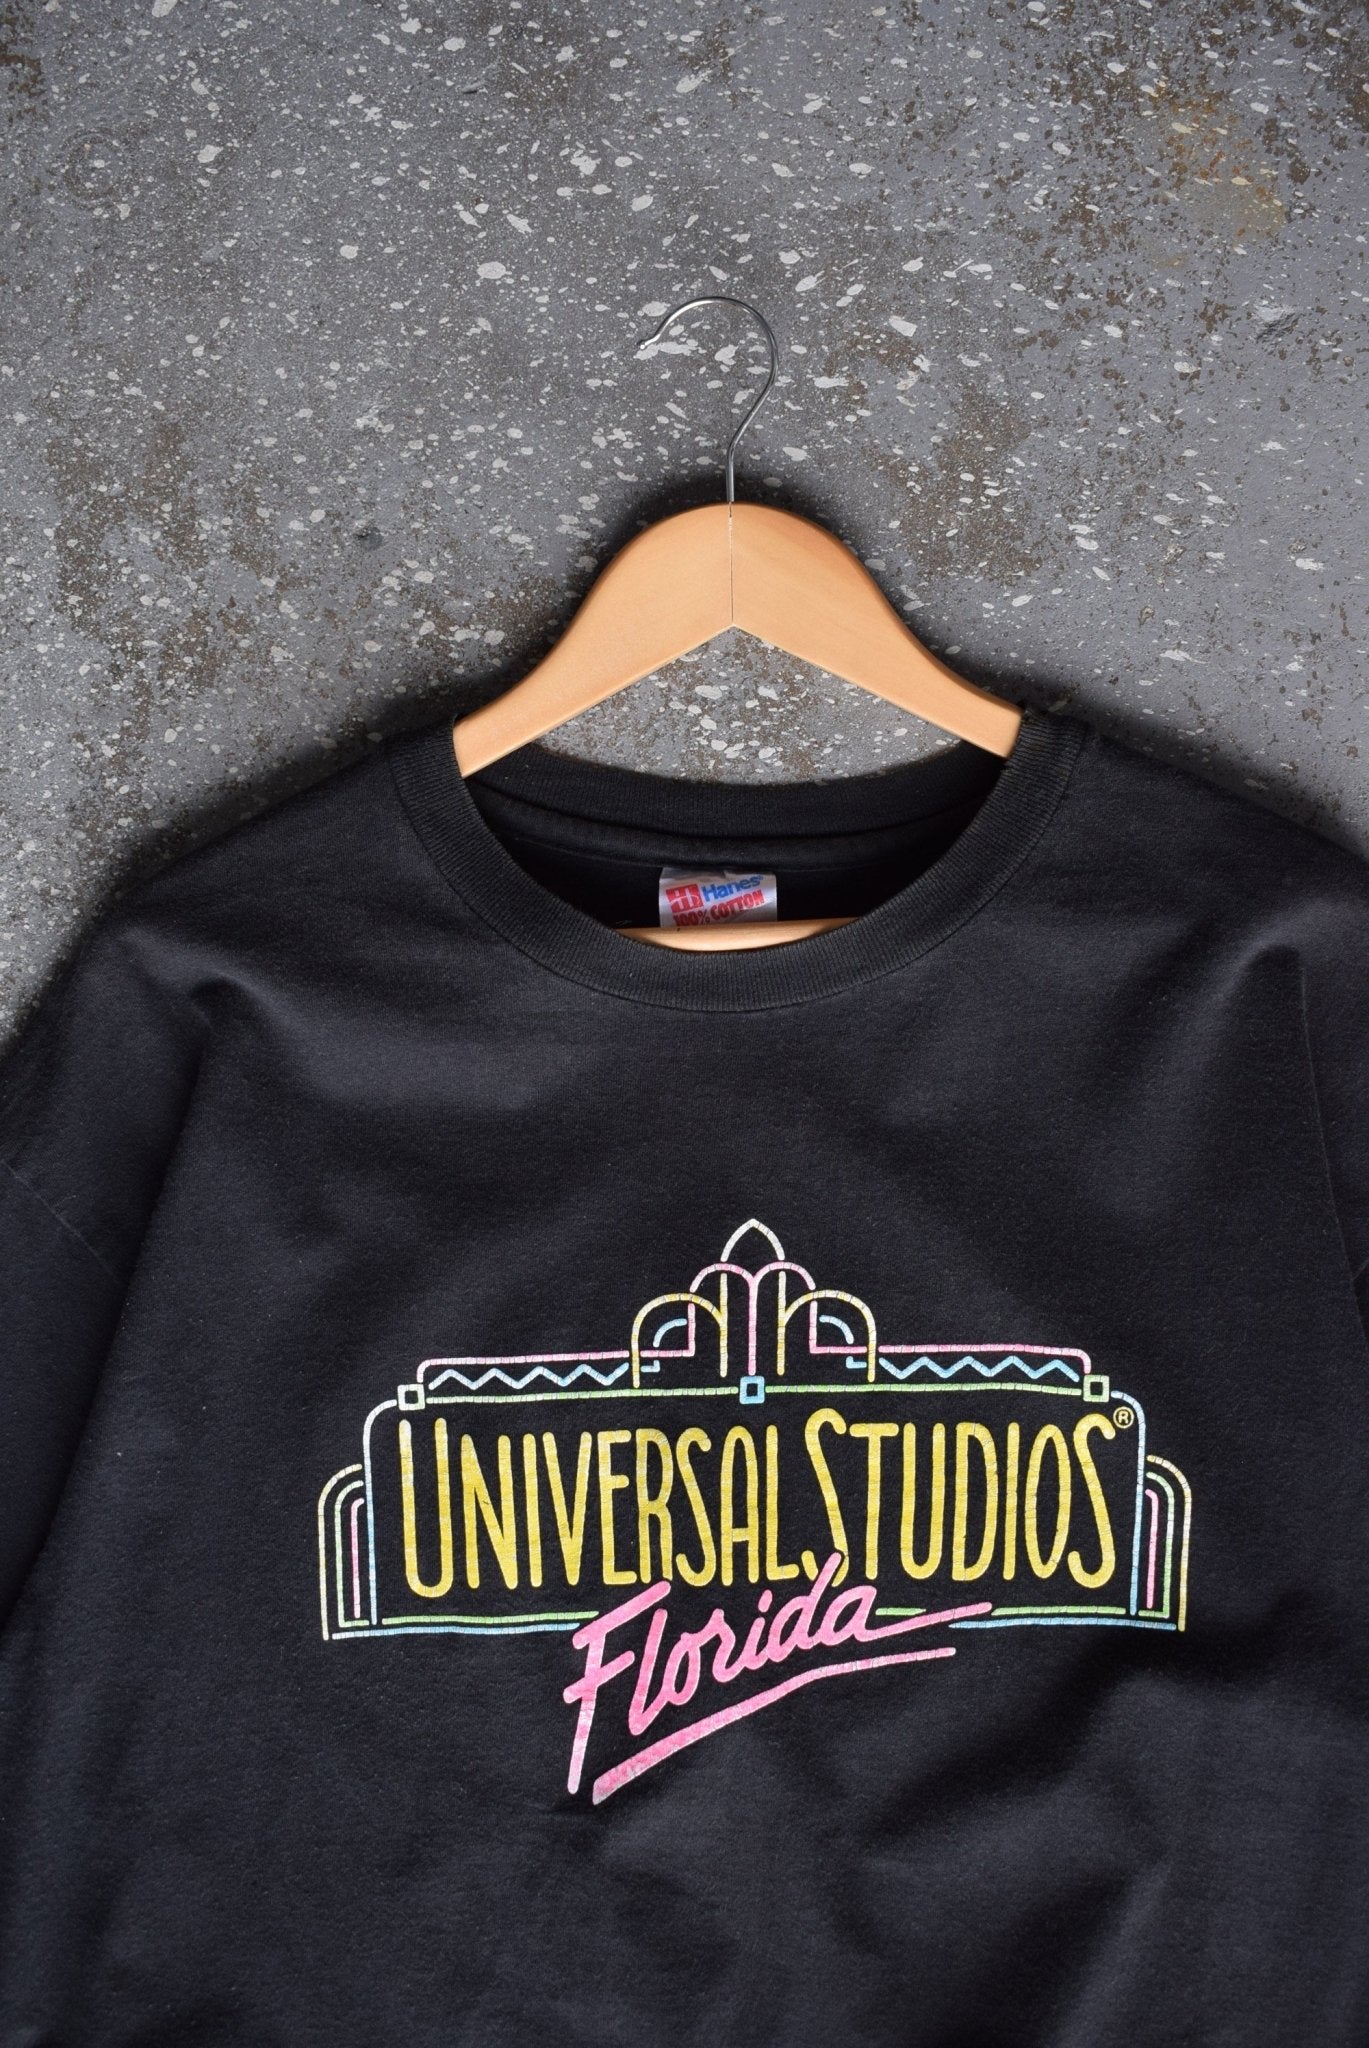 Vintage 90s Universal Studios Florida Tee (XL) - Retrospective Store